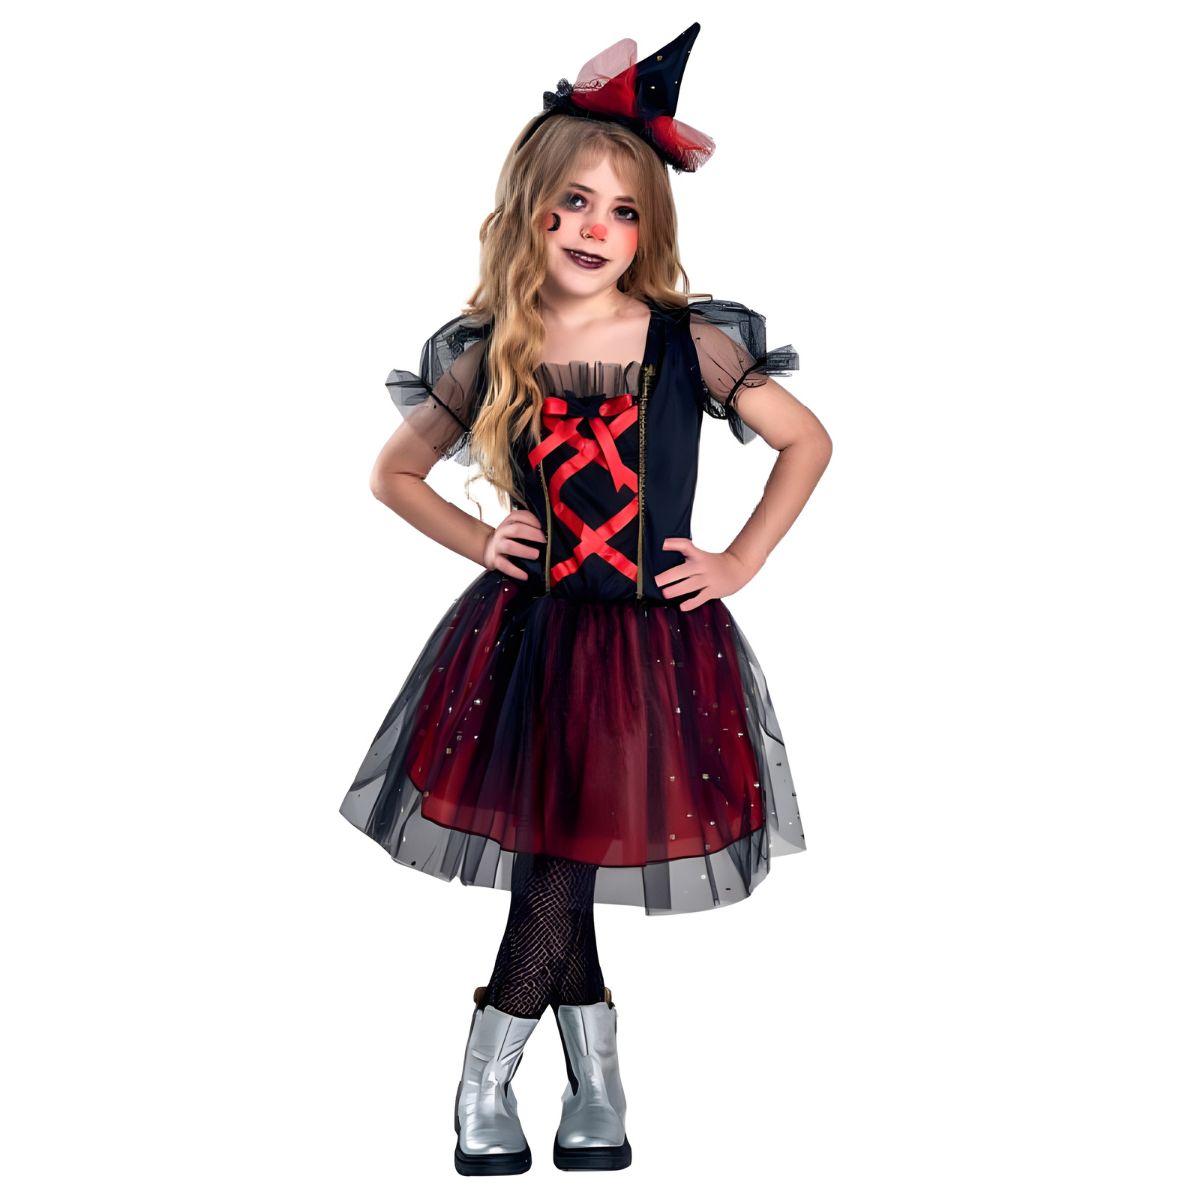 Fantasia Bruxa Halloween Infantil de Luxo com Chapeu